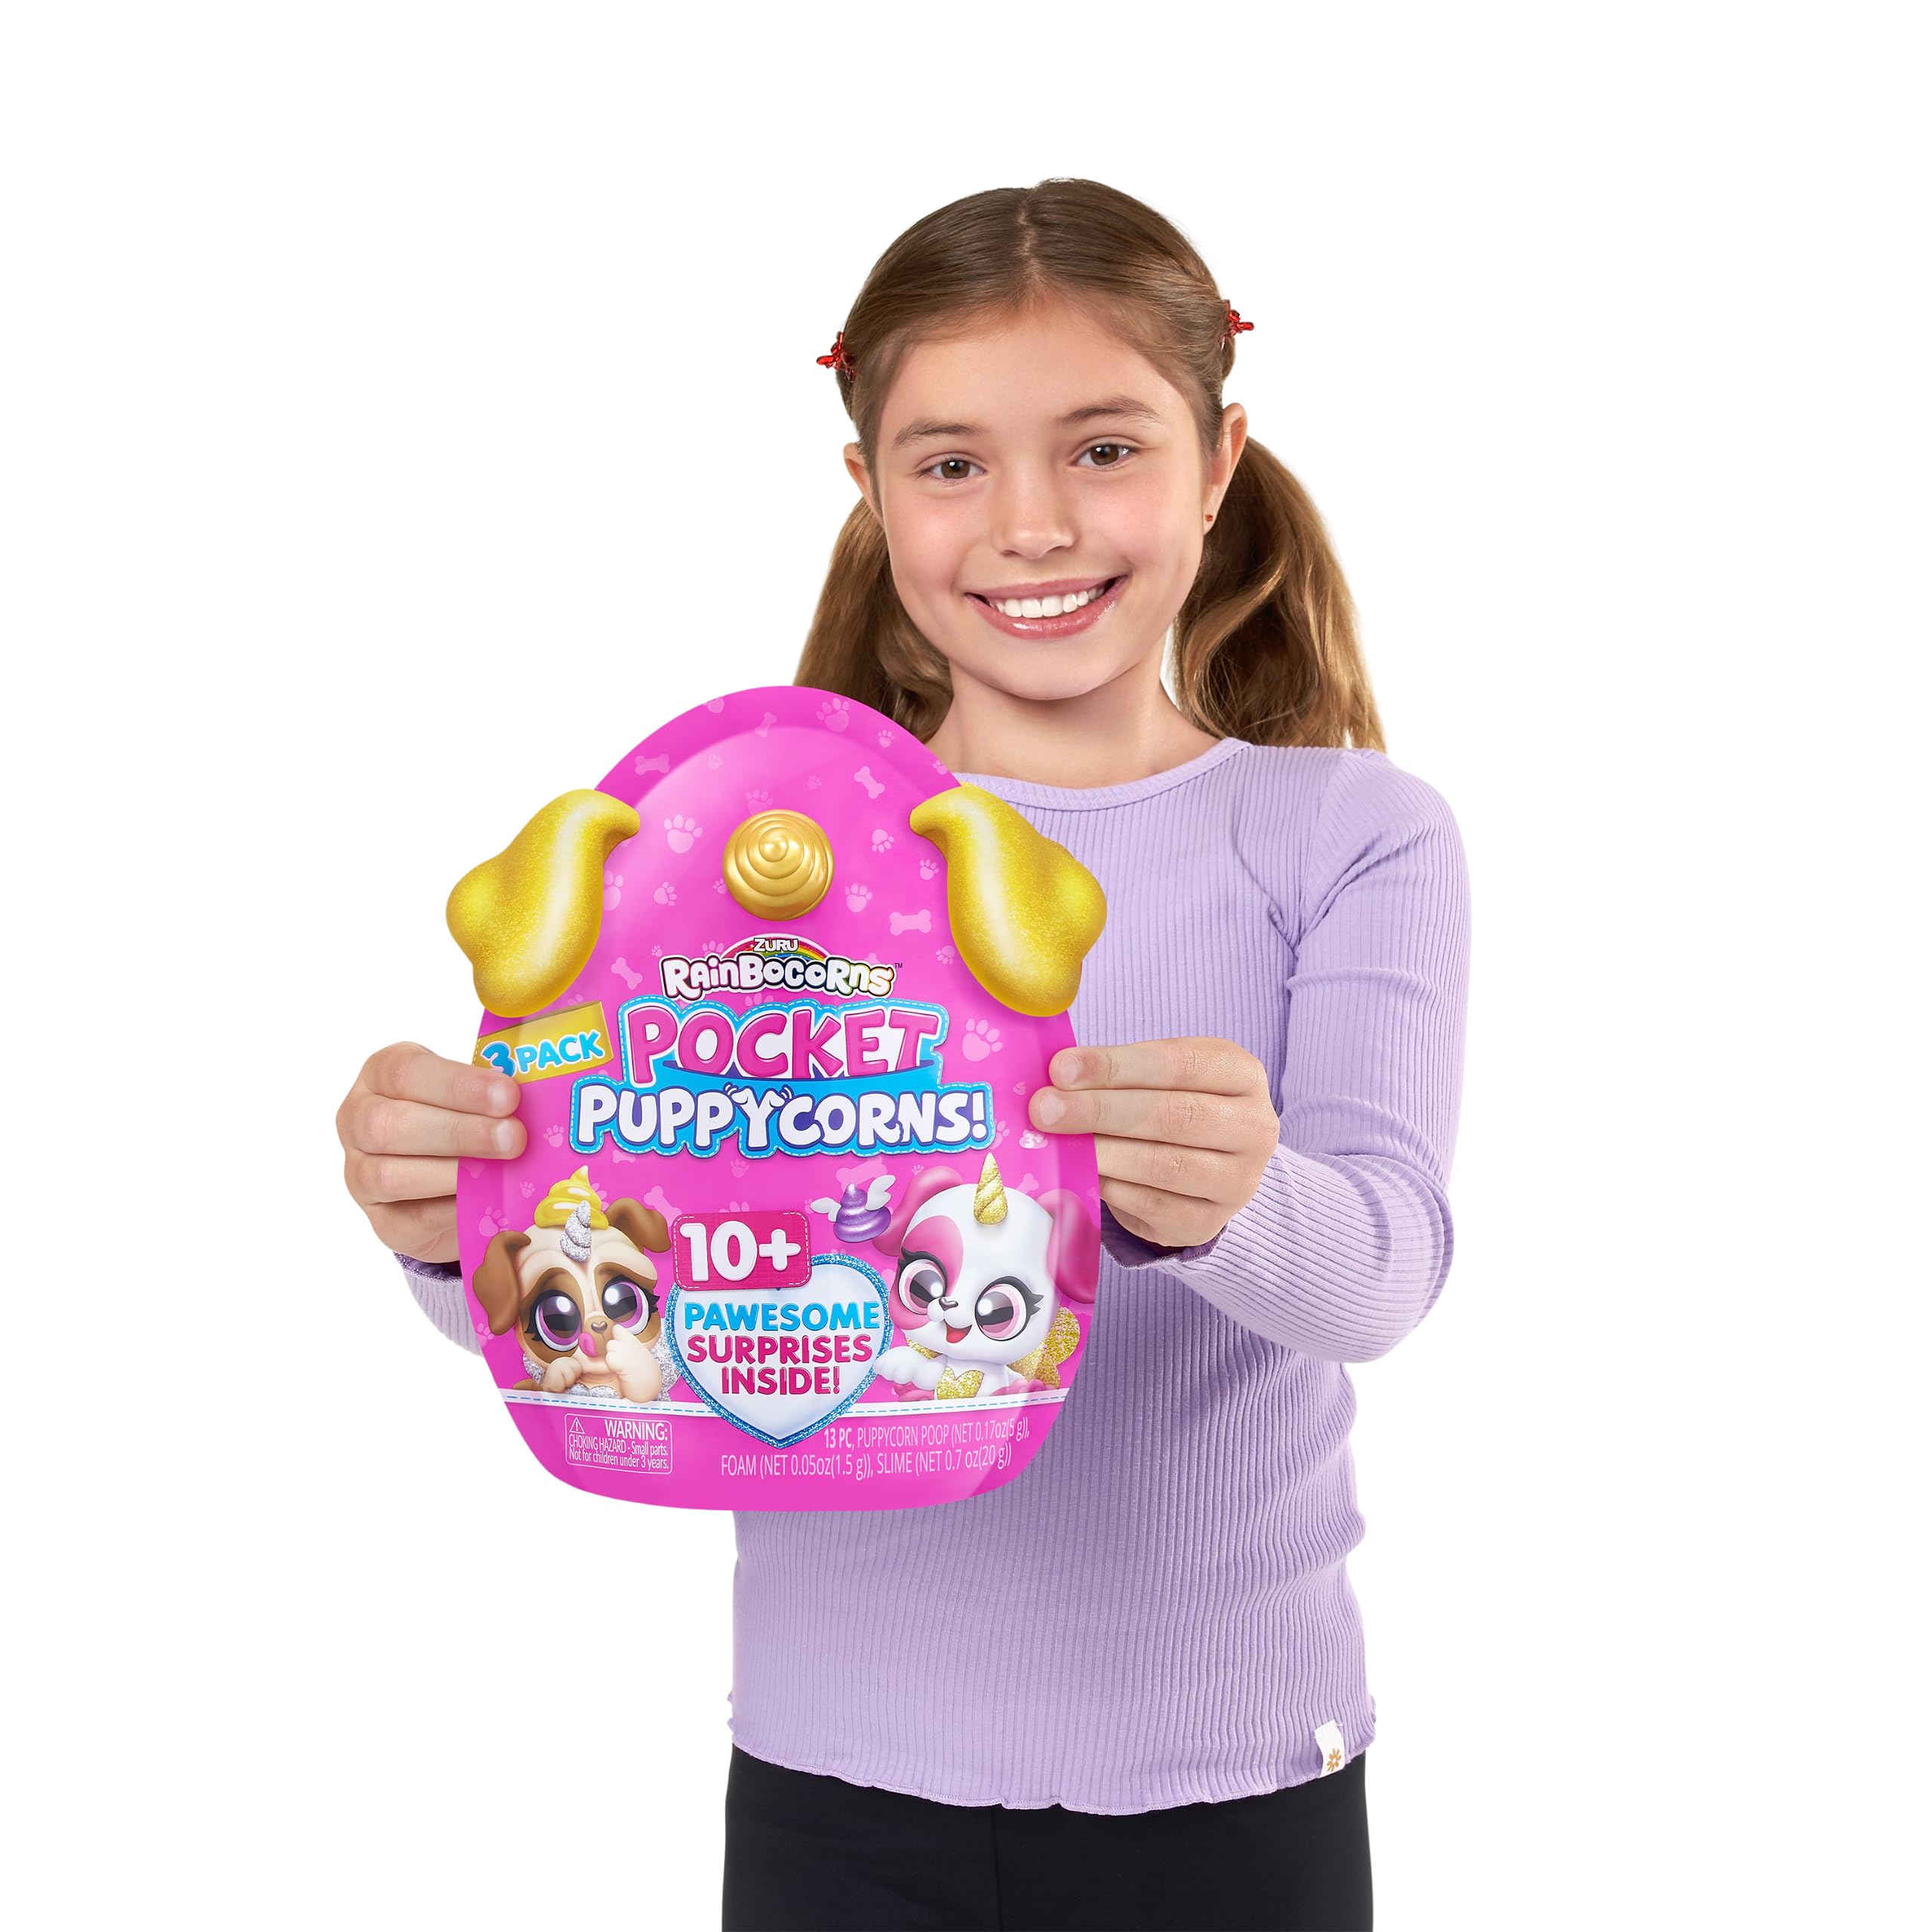 Rainbocorns Pocket Puppycorn 3 Pack by ZURU Toy Puppy Dog Mini Unboxing Girls Gifting Idea, Toys for Girls, Kid's Birthday Gift